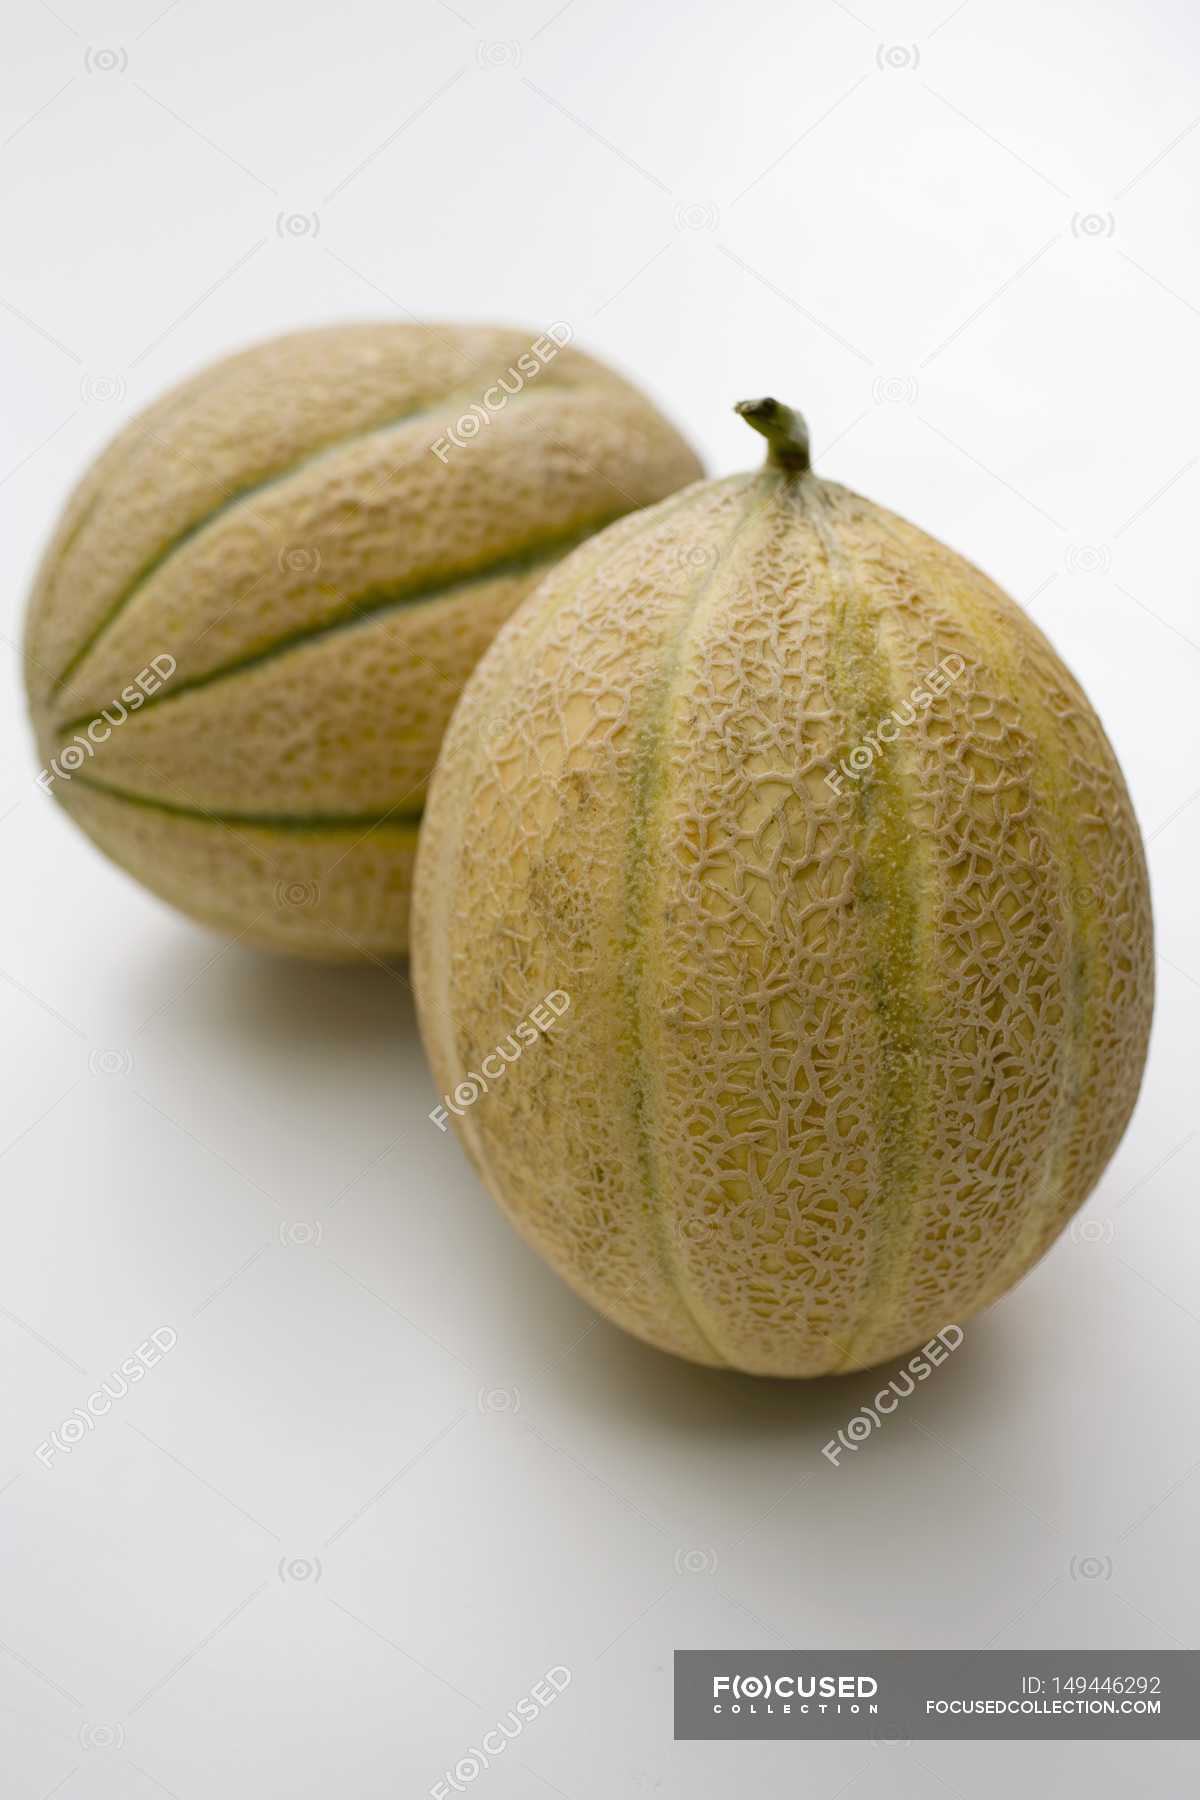 Fresh cantaloupe melons — Stock Photo | #149446292